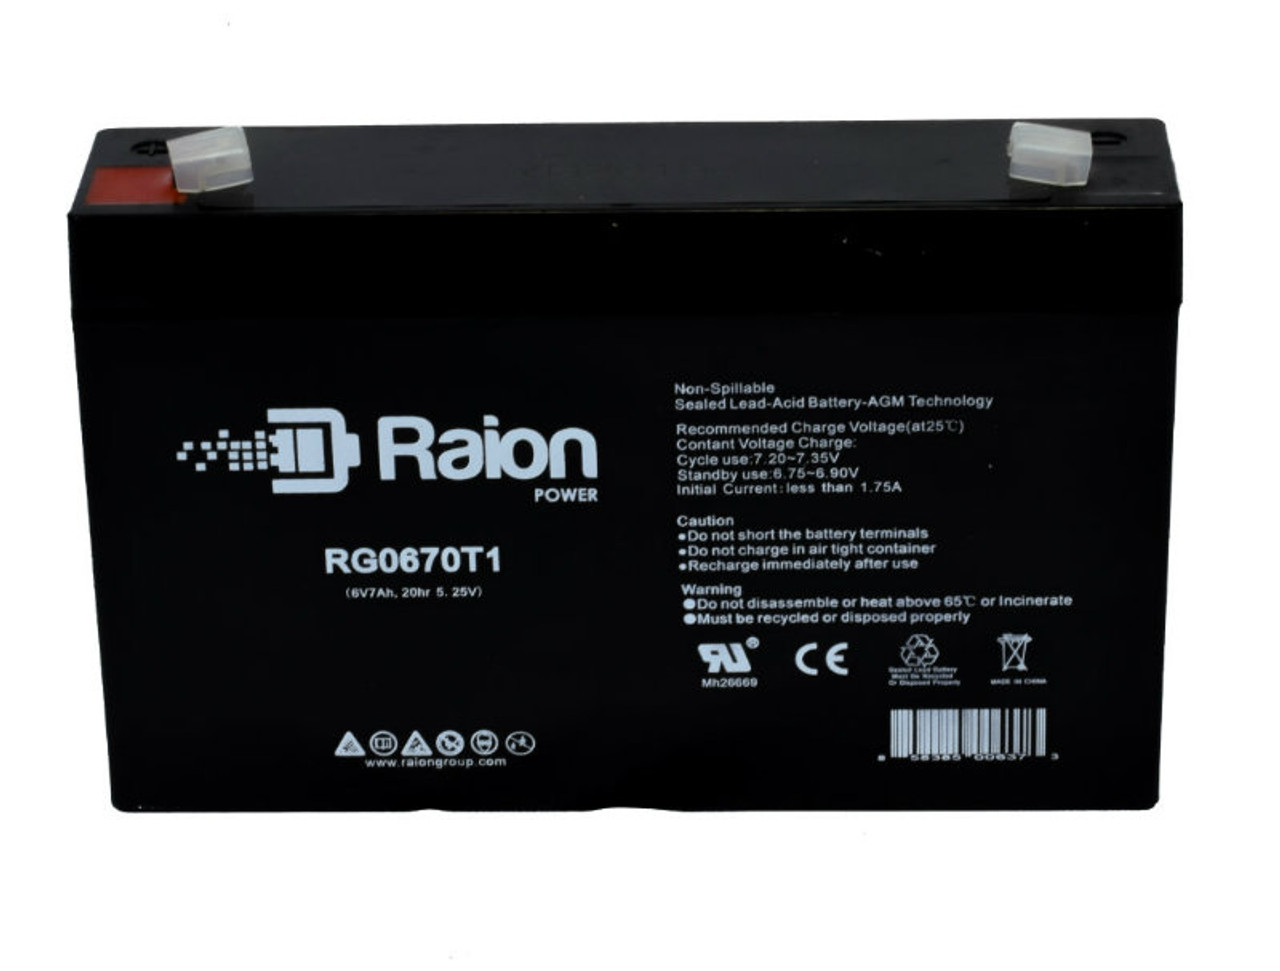 Raion Power RG0670T1 SLA Battery for Zeus PC7-6F1 OEM Battery